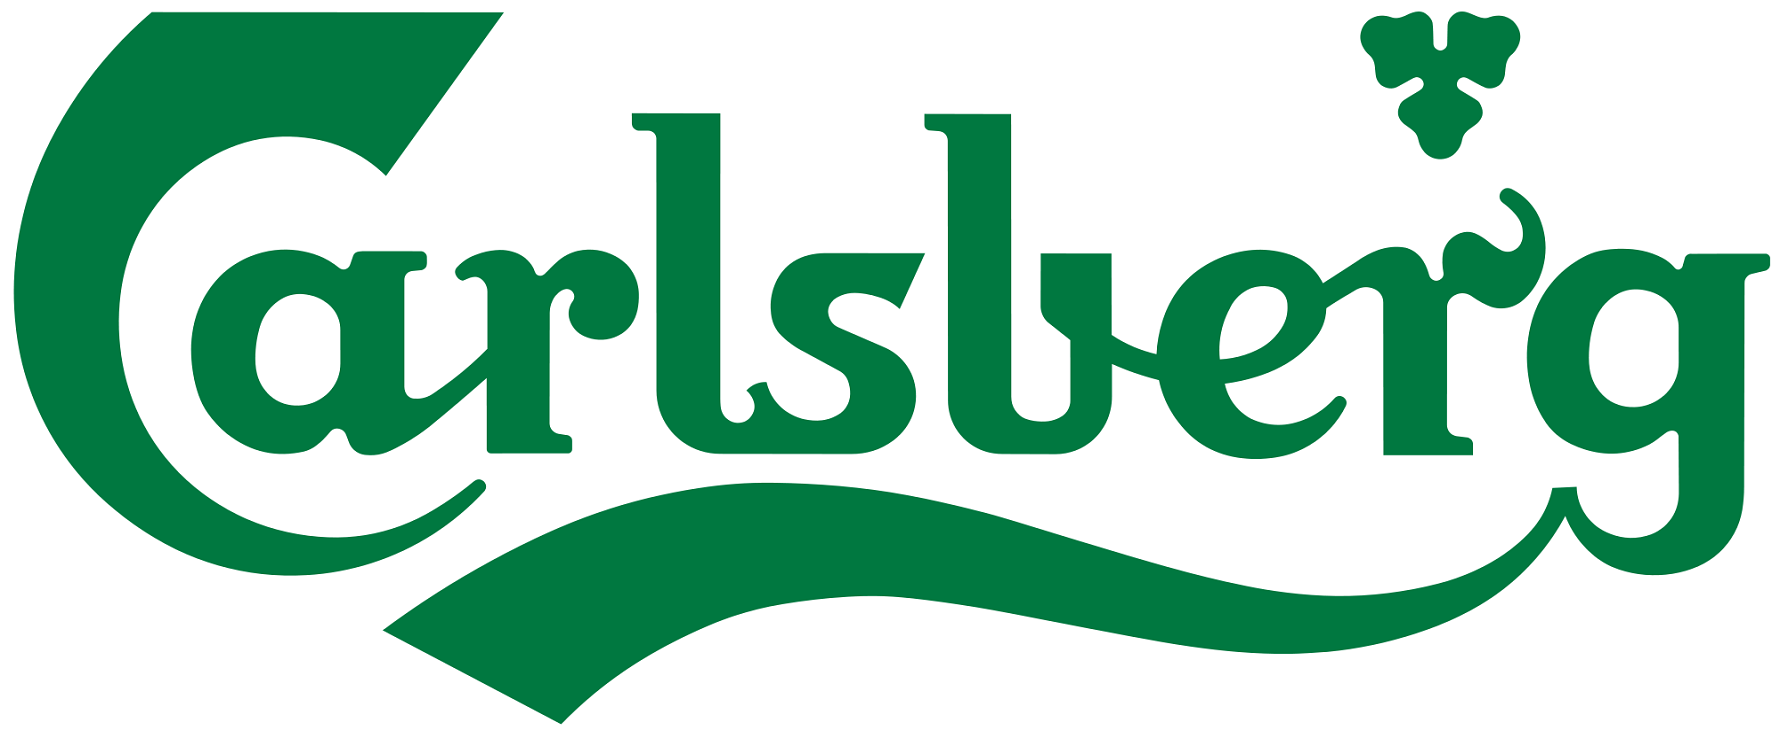 carlsberg-logo.png